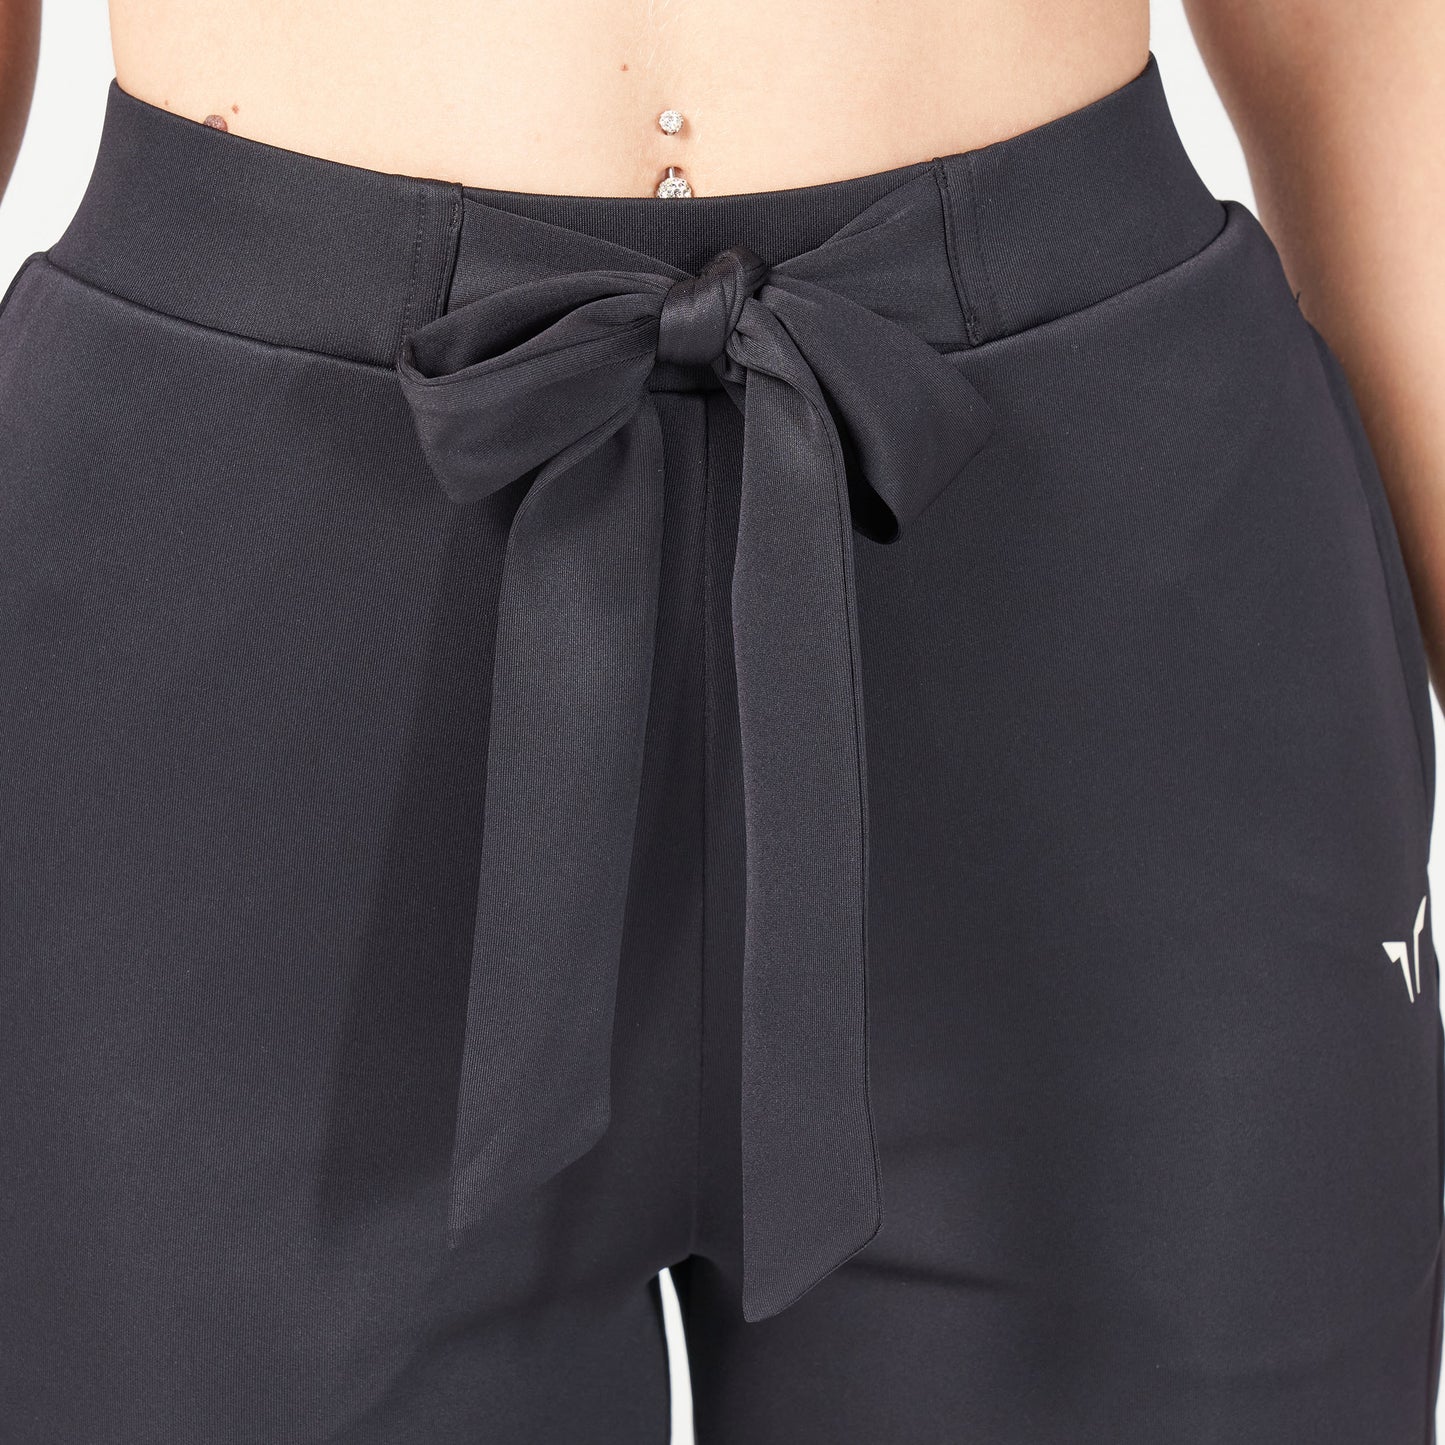 squatwolf-workout-clothes-do-knot-wide-leg-pants-black-gym-pants-for-women